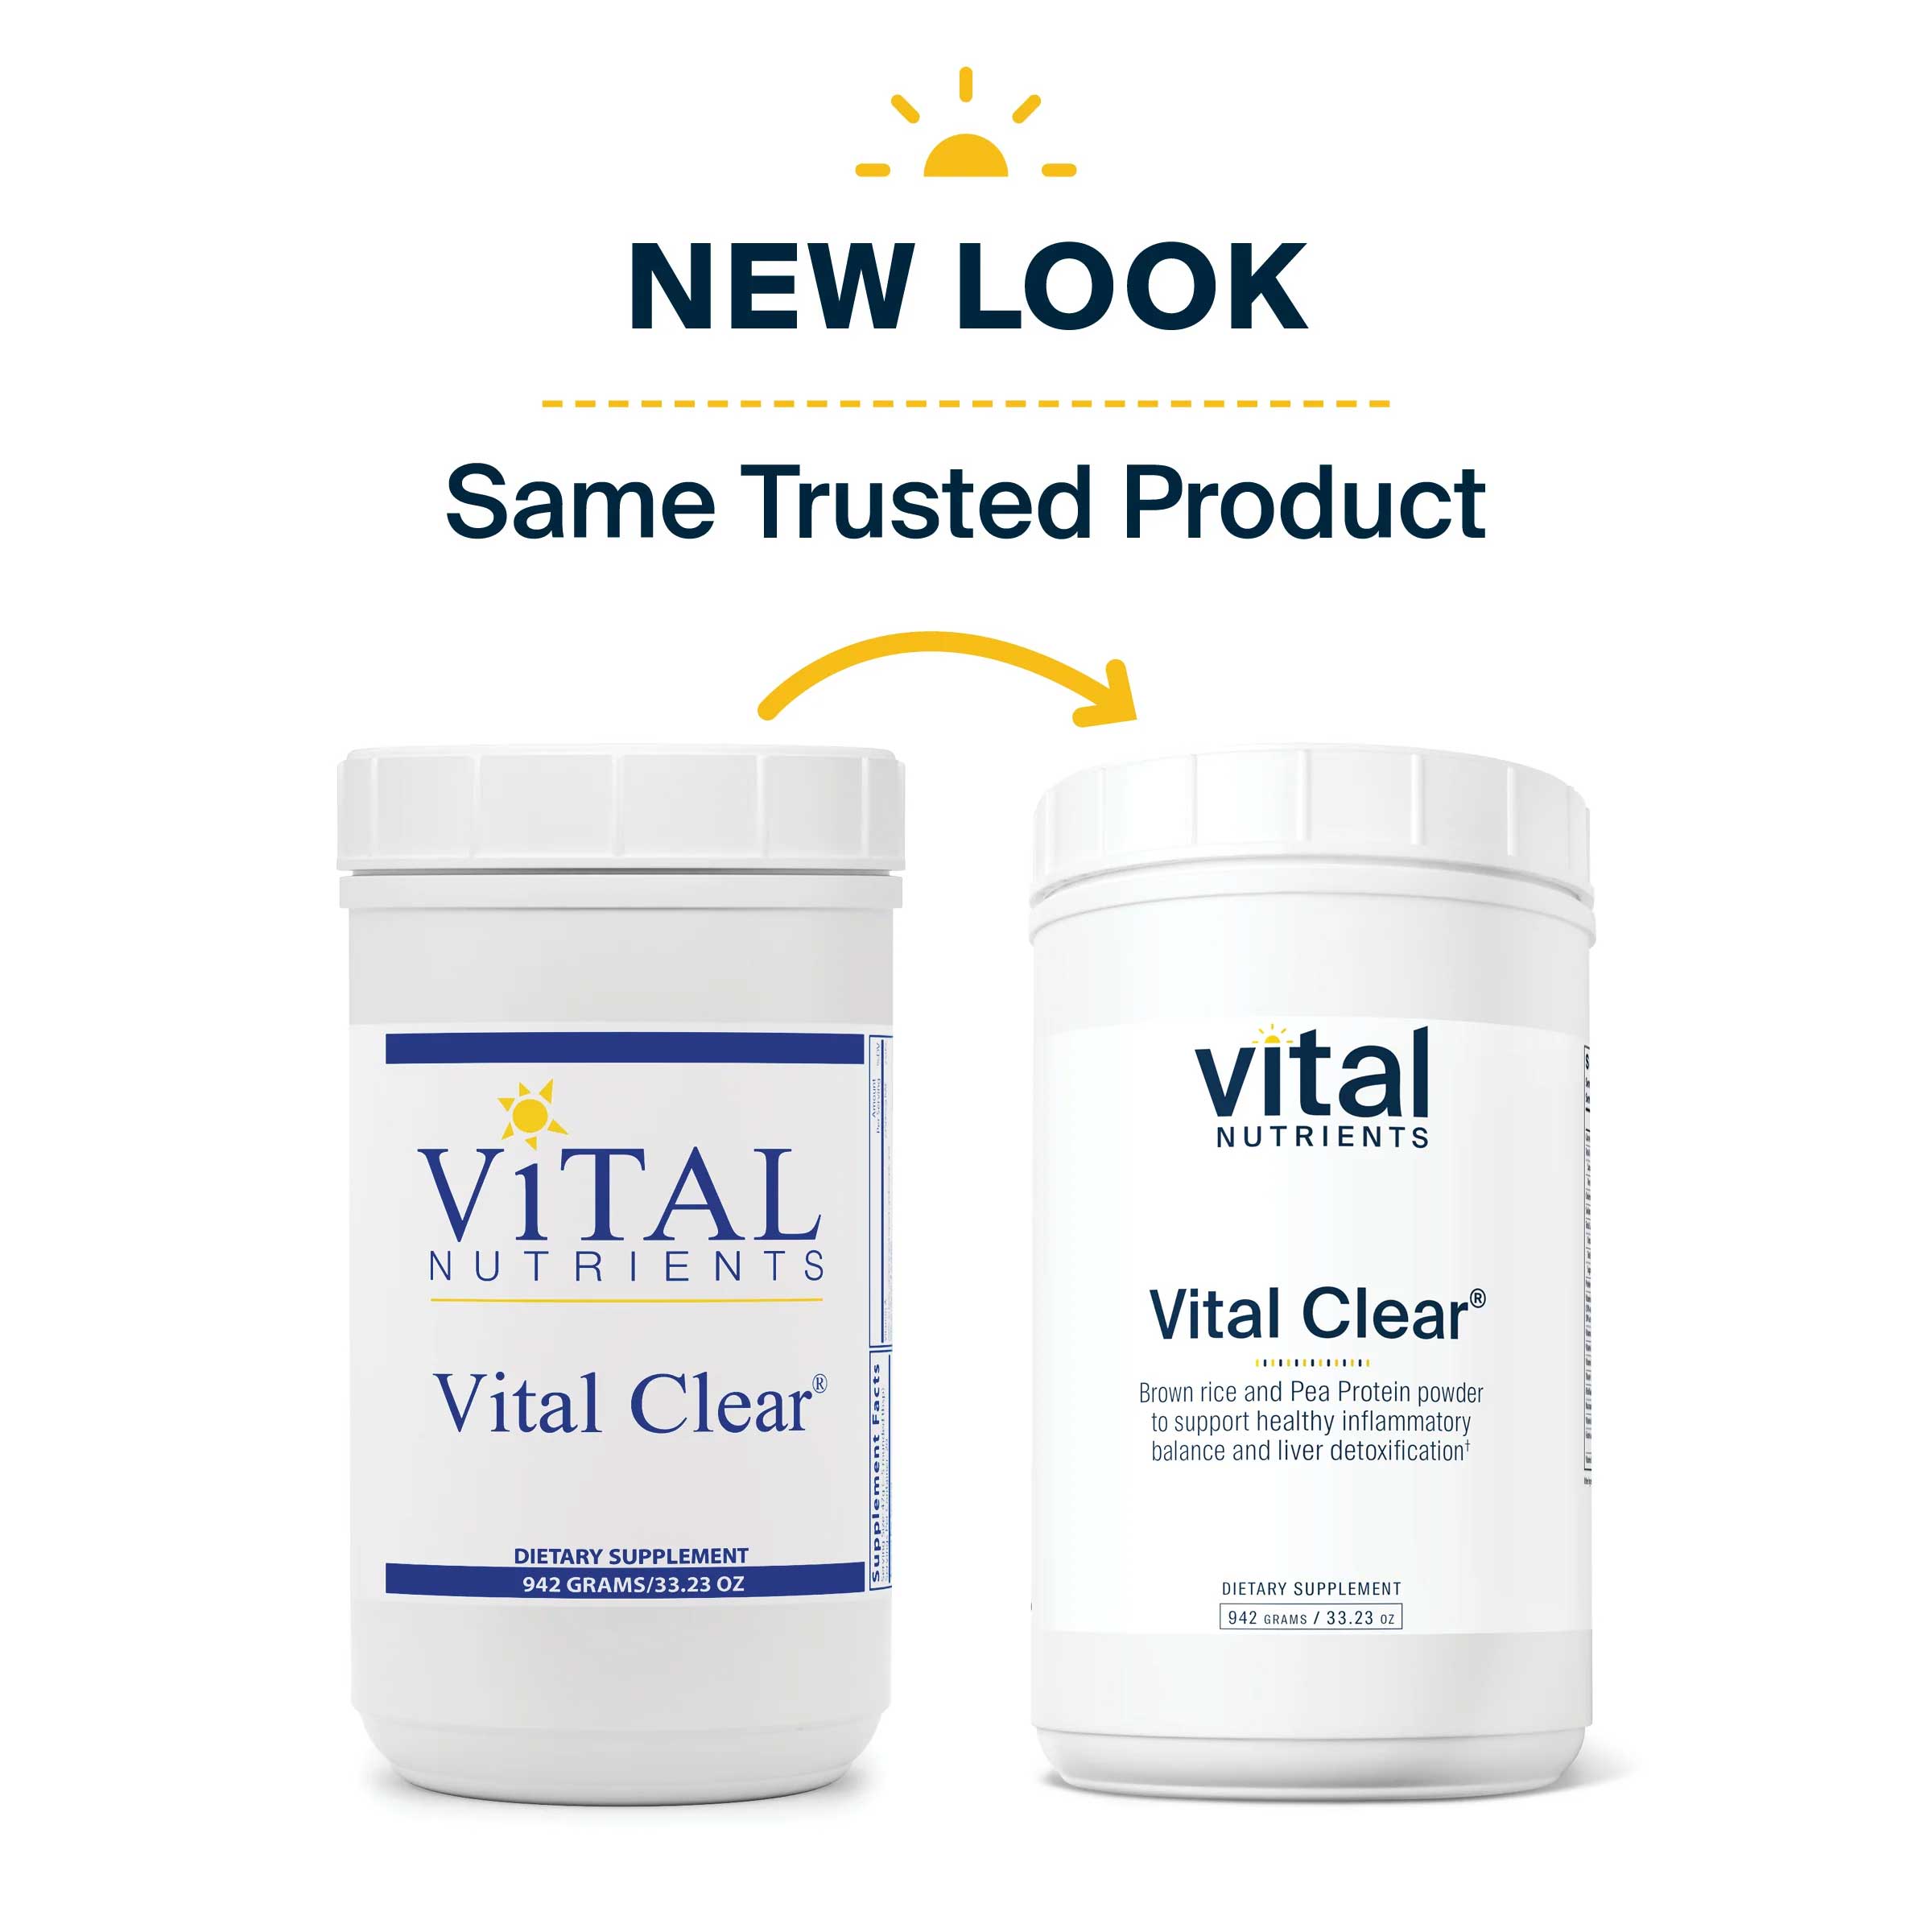 Vital Nutrients Vital Clear New Look